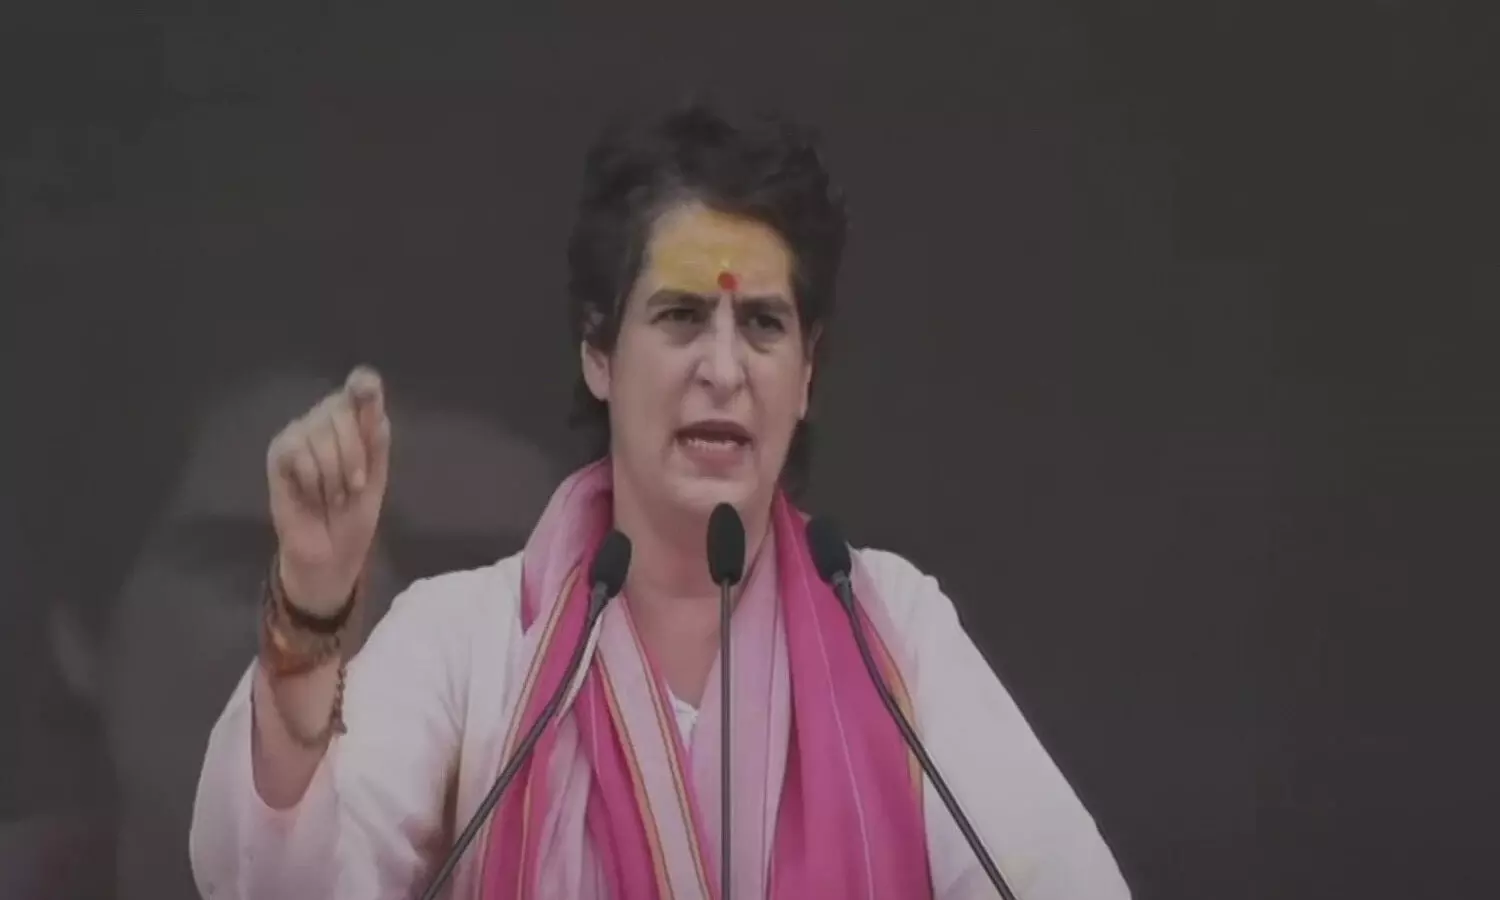 Congress leader Priyanka Gandhi Vadra addresses Kisan Nyay rally in Varanasi